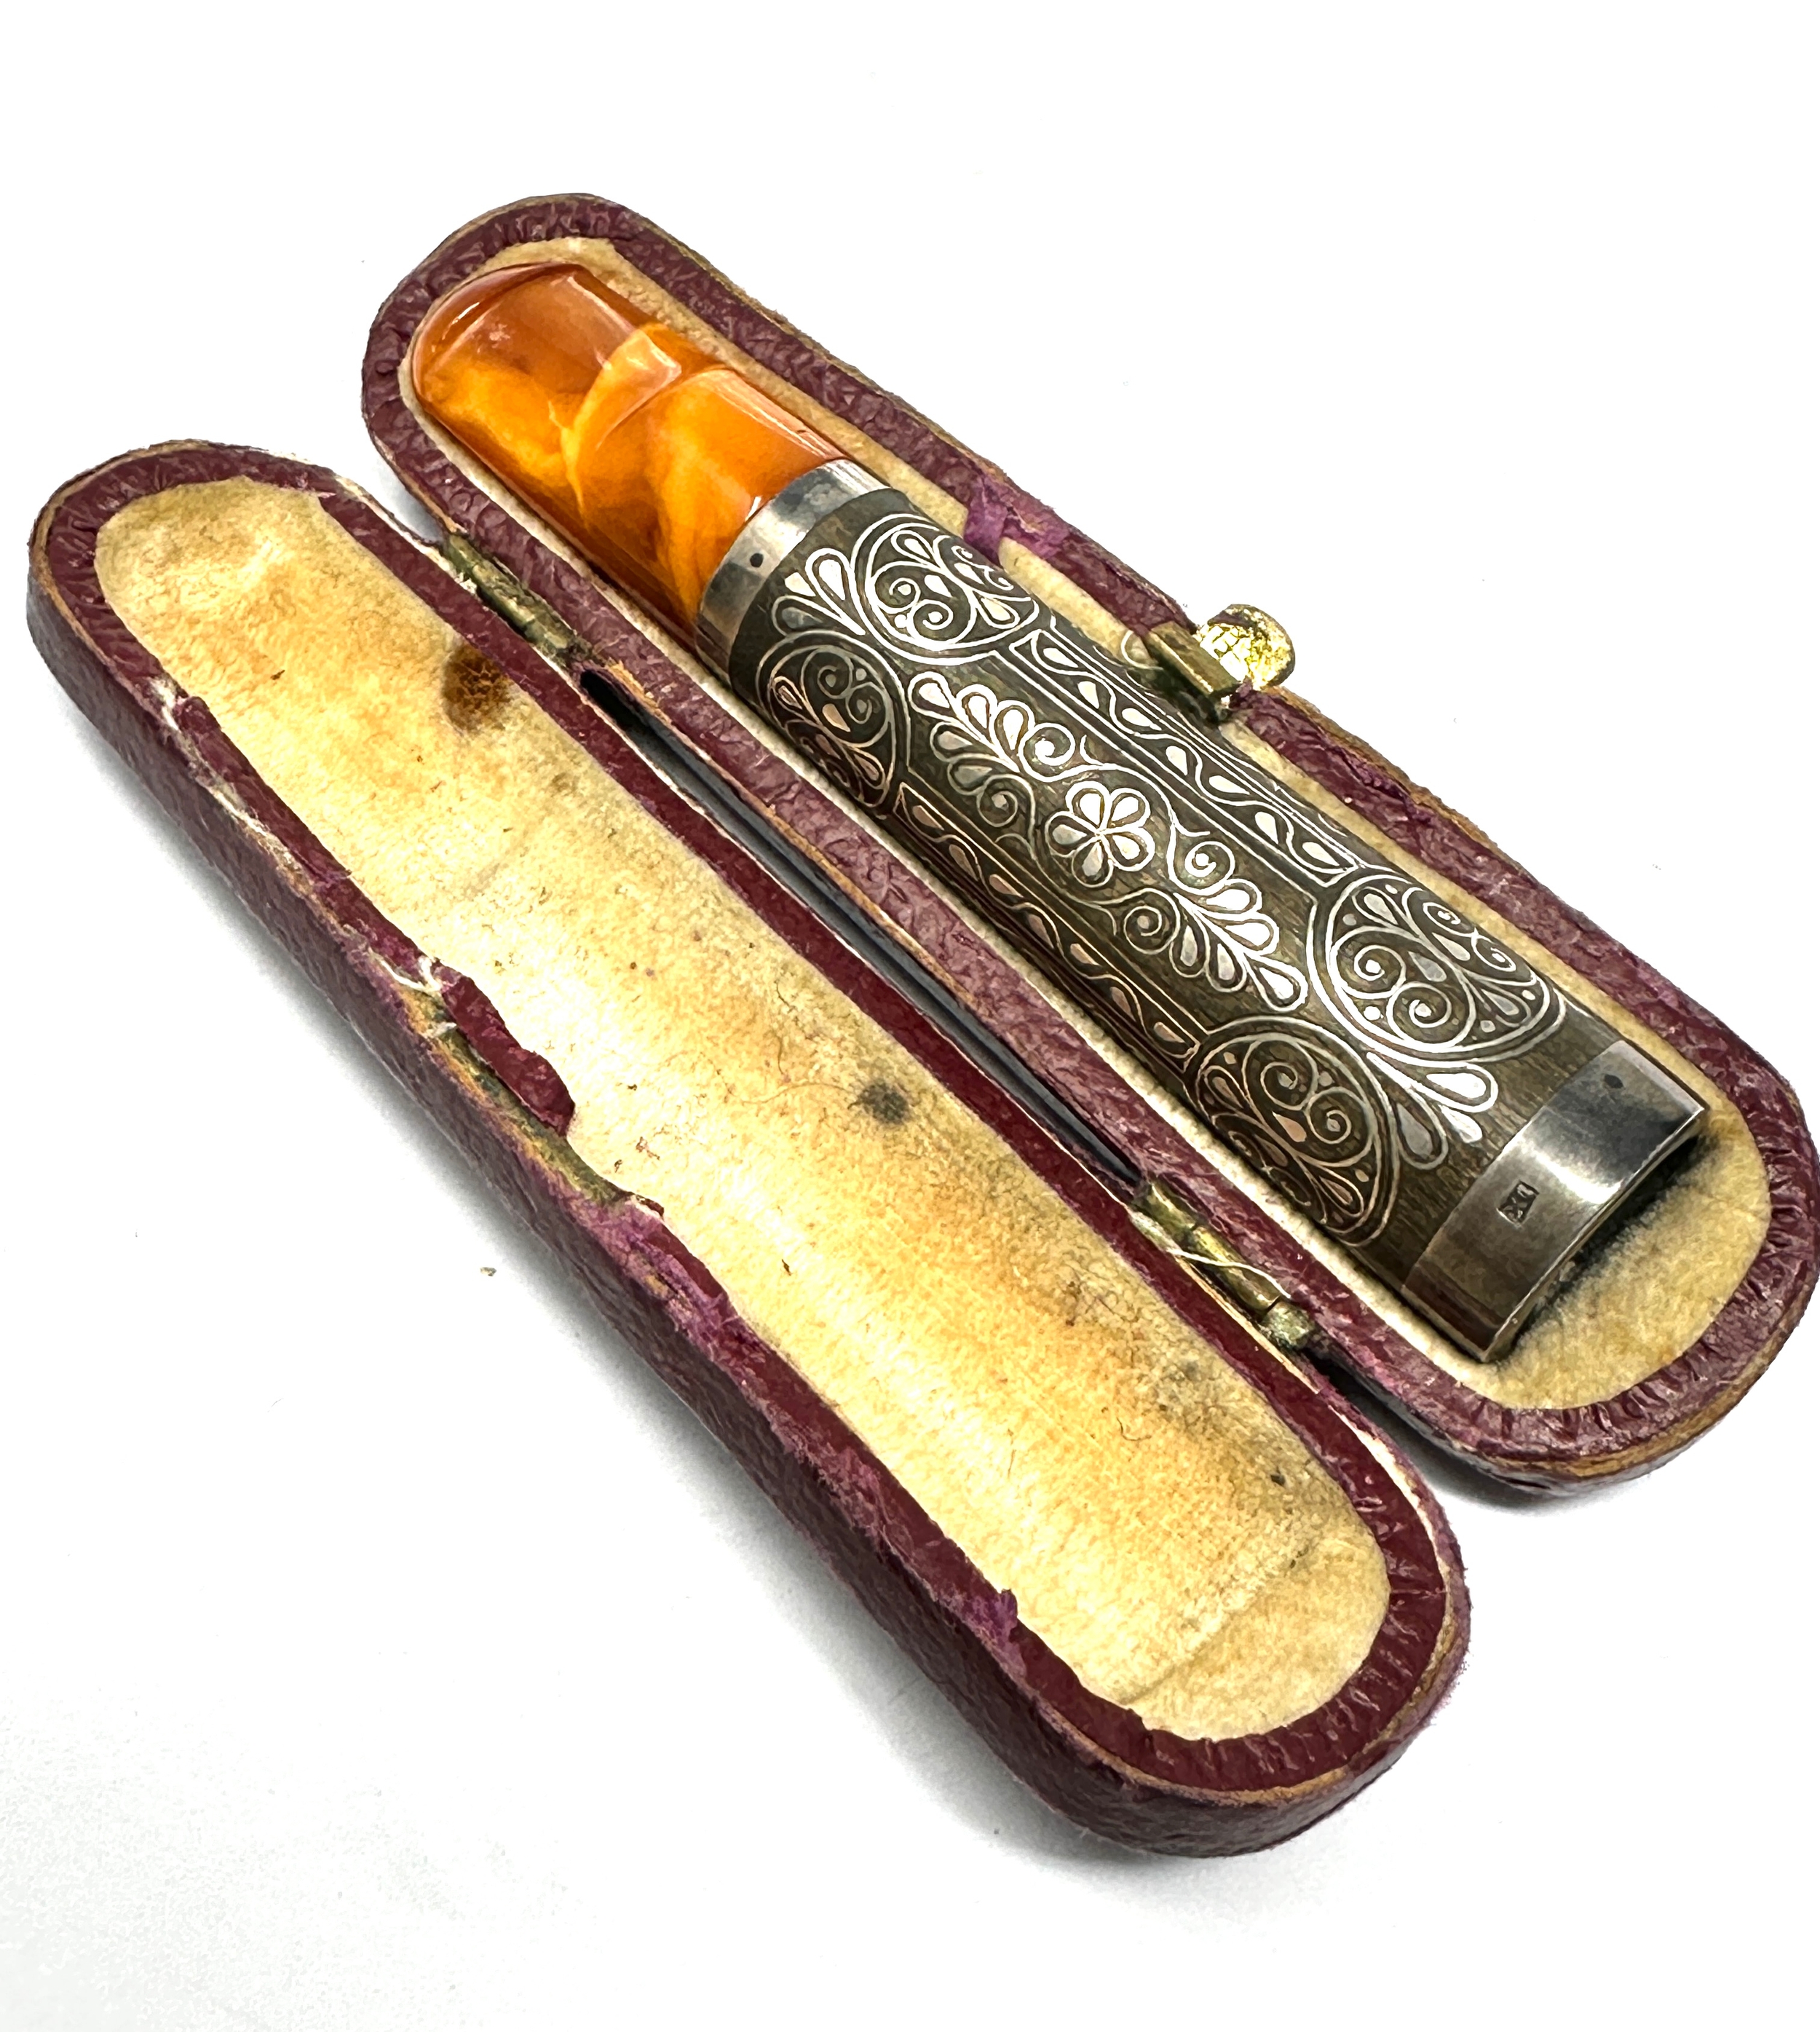 Cased antique silver & amber cheroot holder